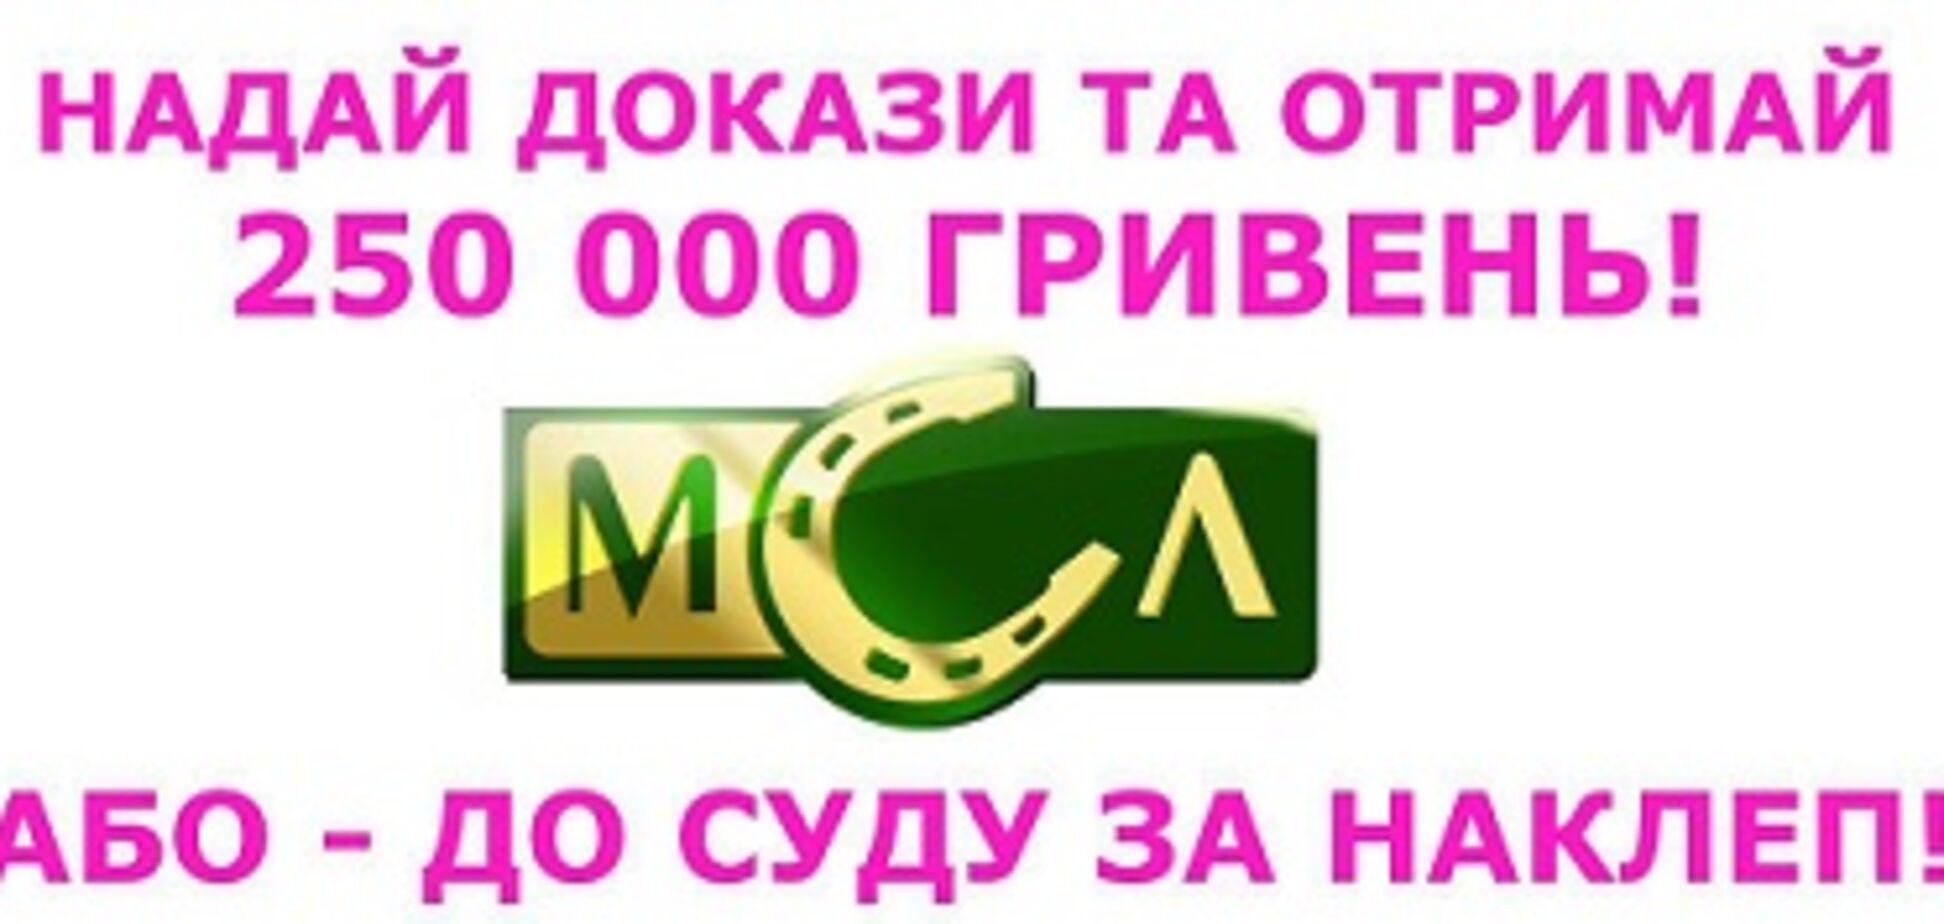 Президент 'М.С.Л.' объявил награду в 250 000 гривен тому, кто предоставит доказательства обвинений